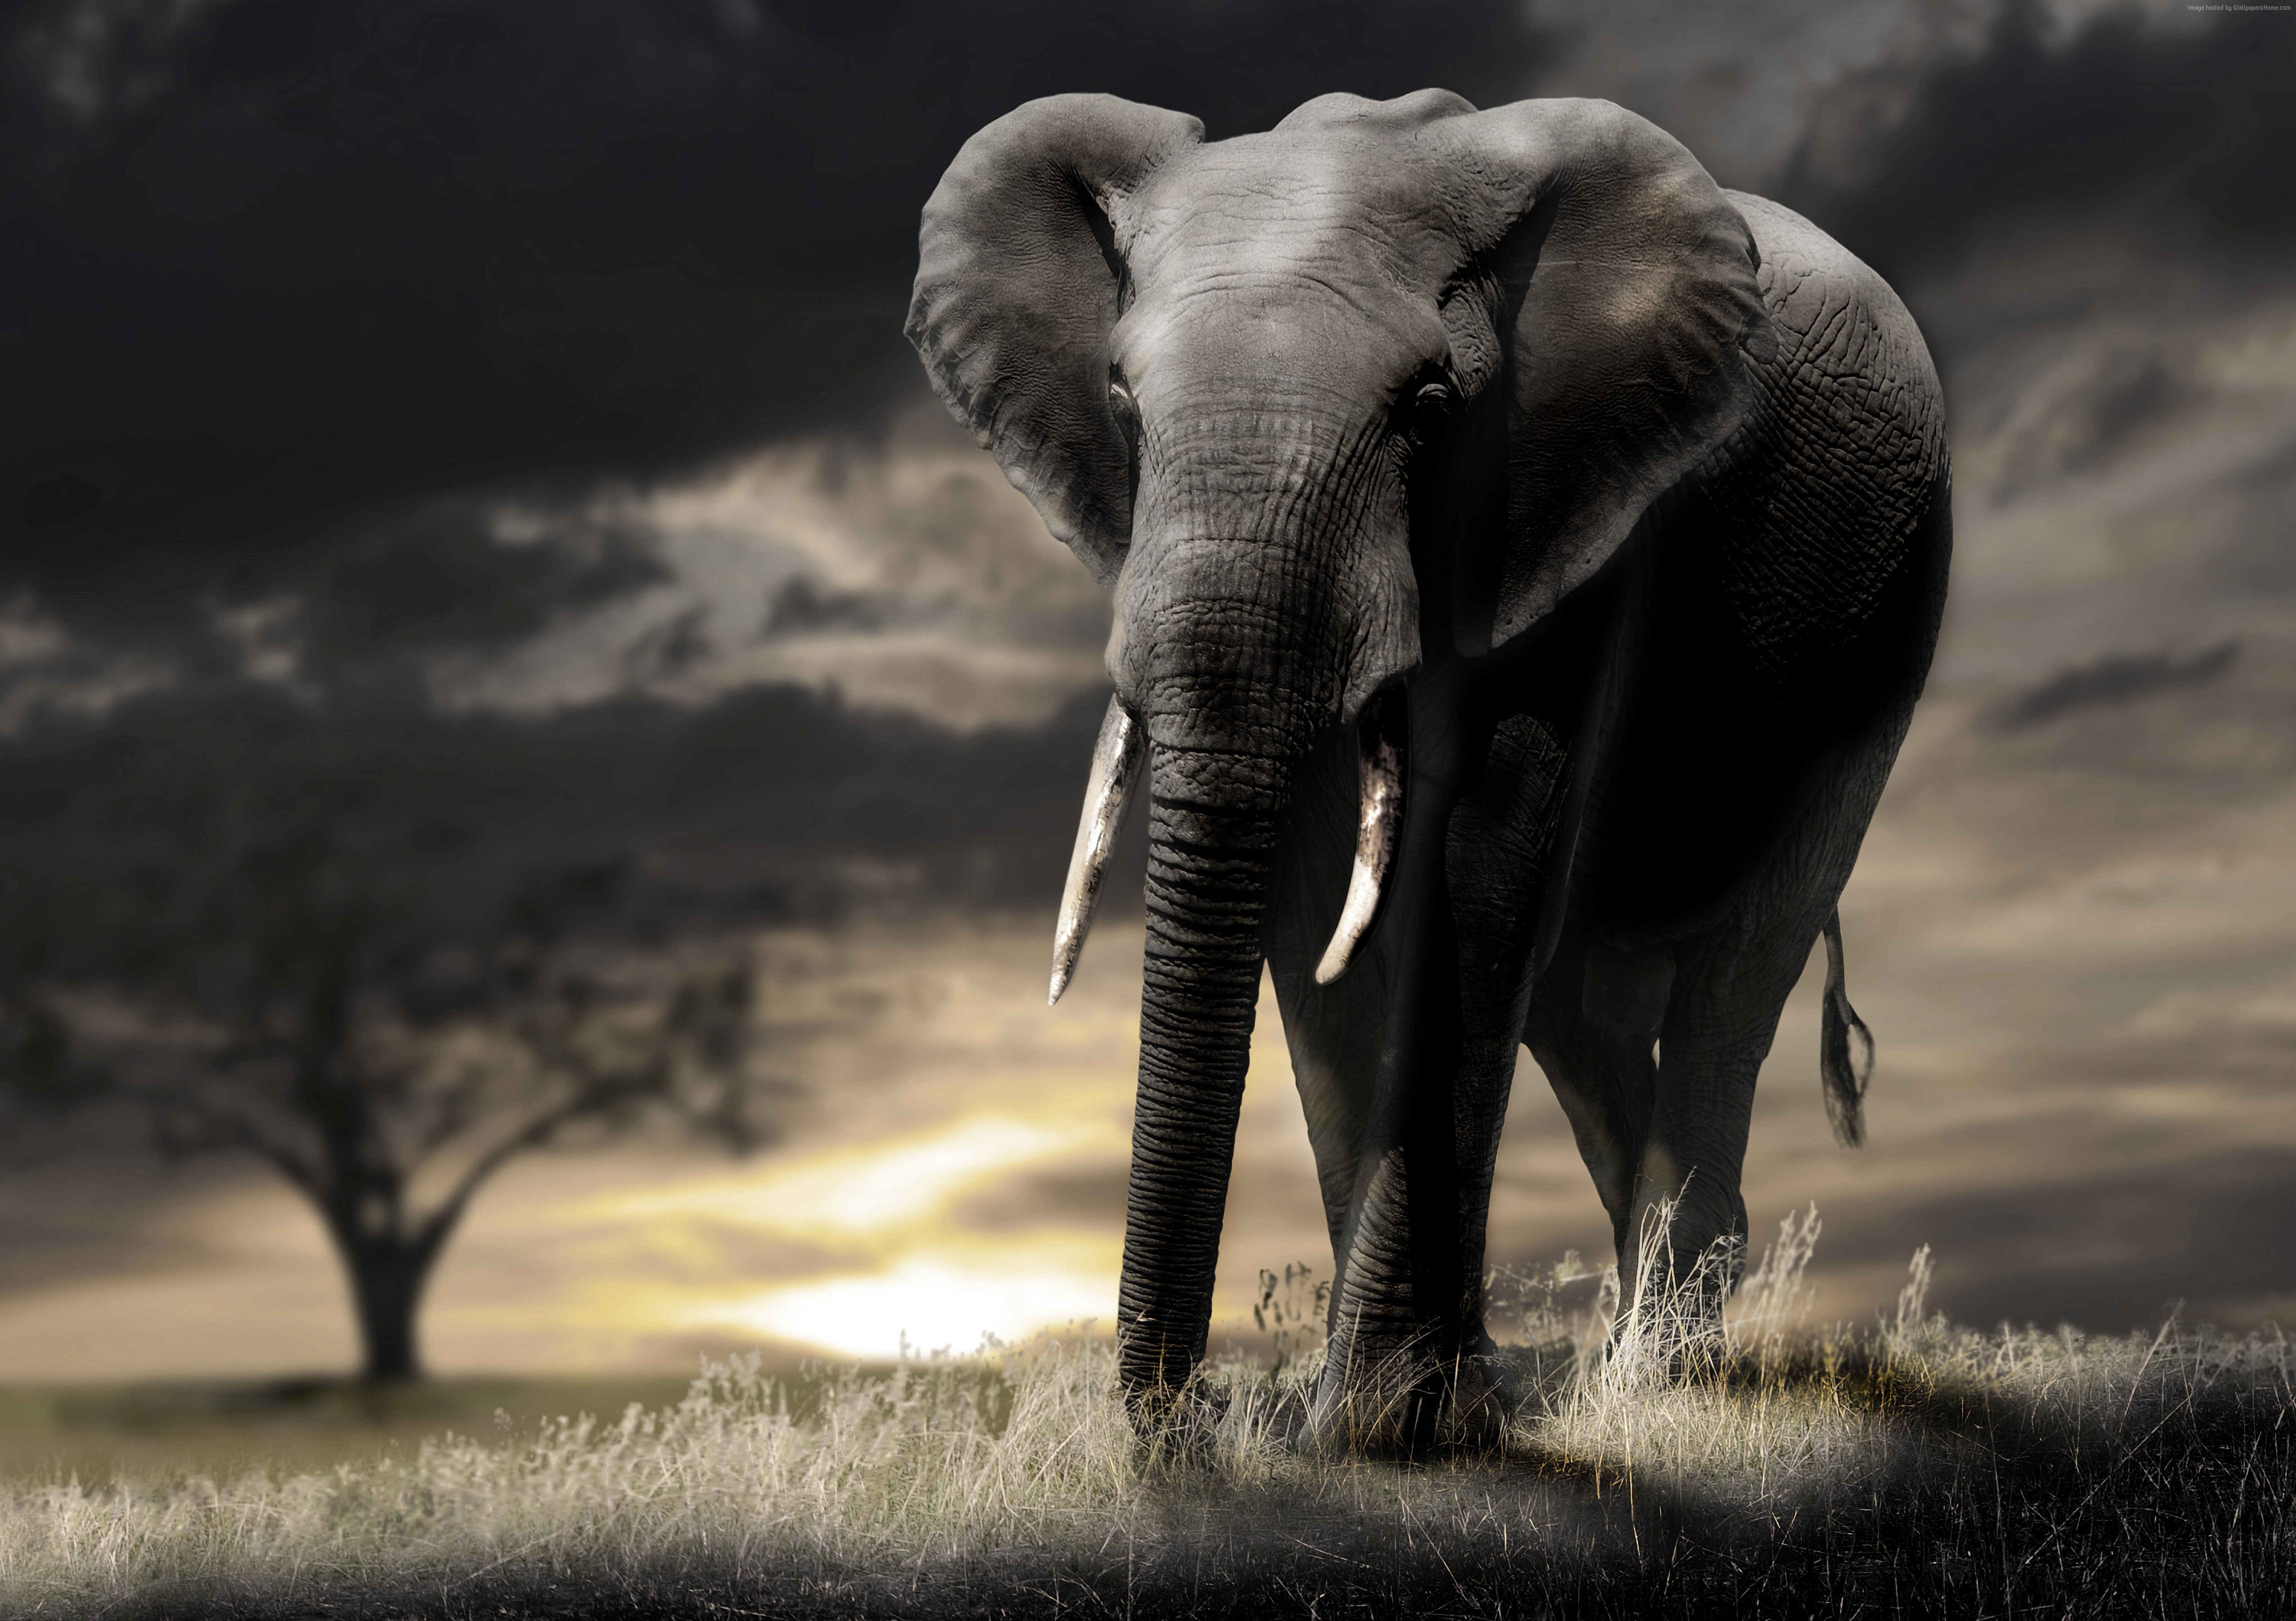 showhome wallpaper,elefant,elefanten und mammuts,landtier,tierwelt,afrikanischer elefant